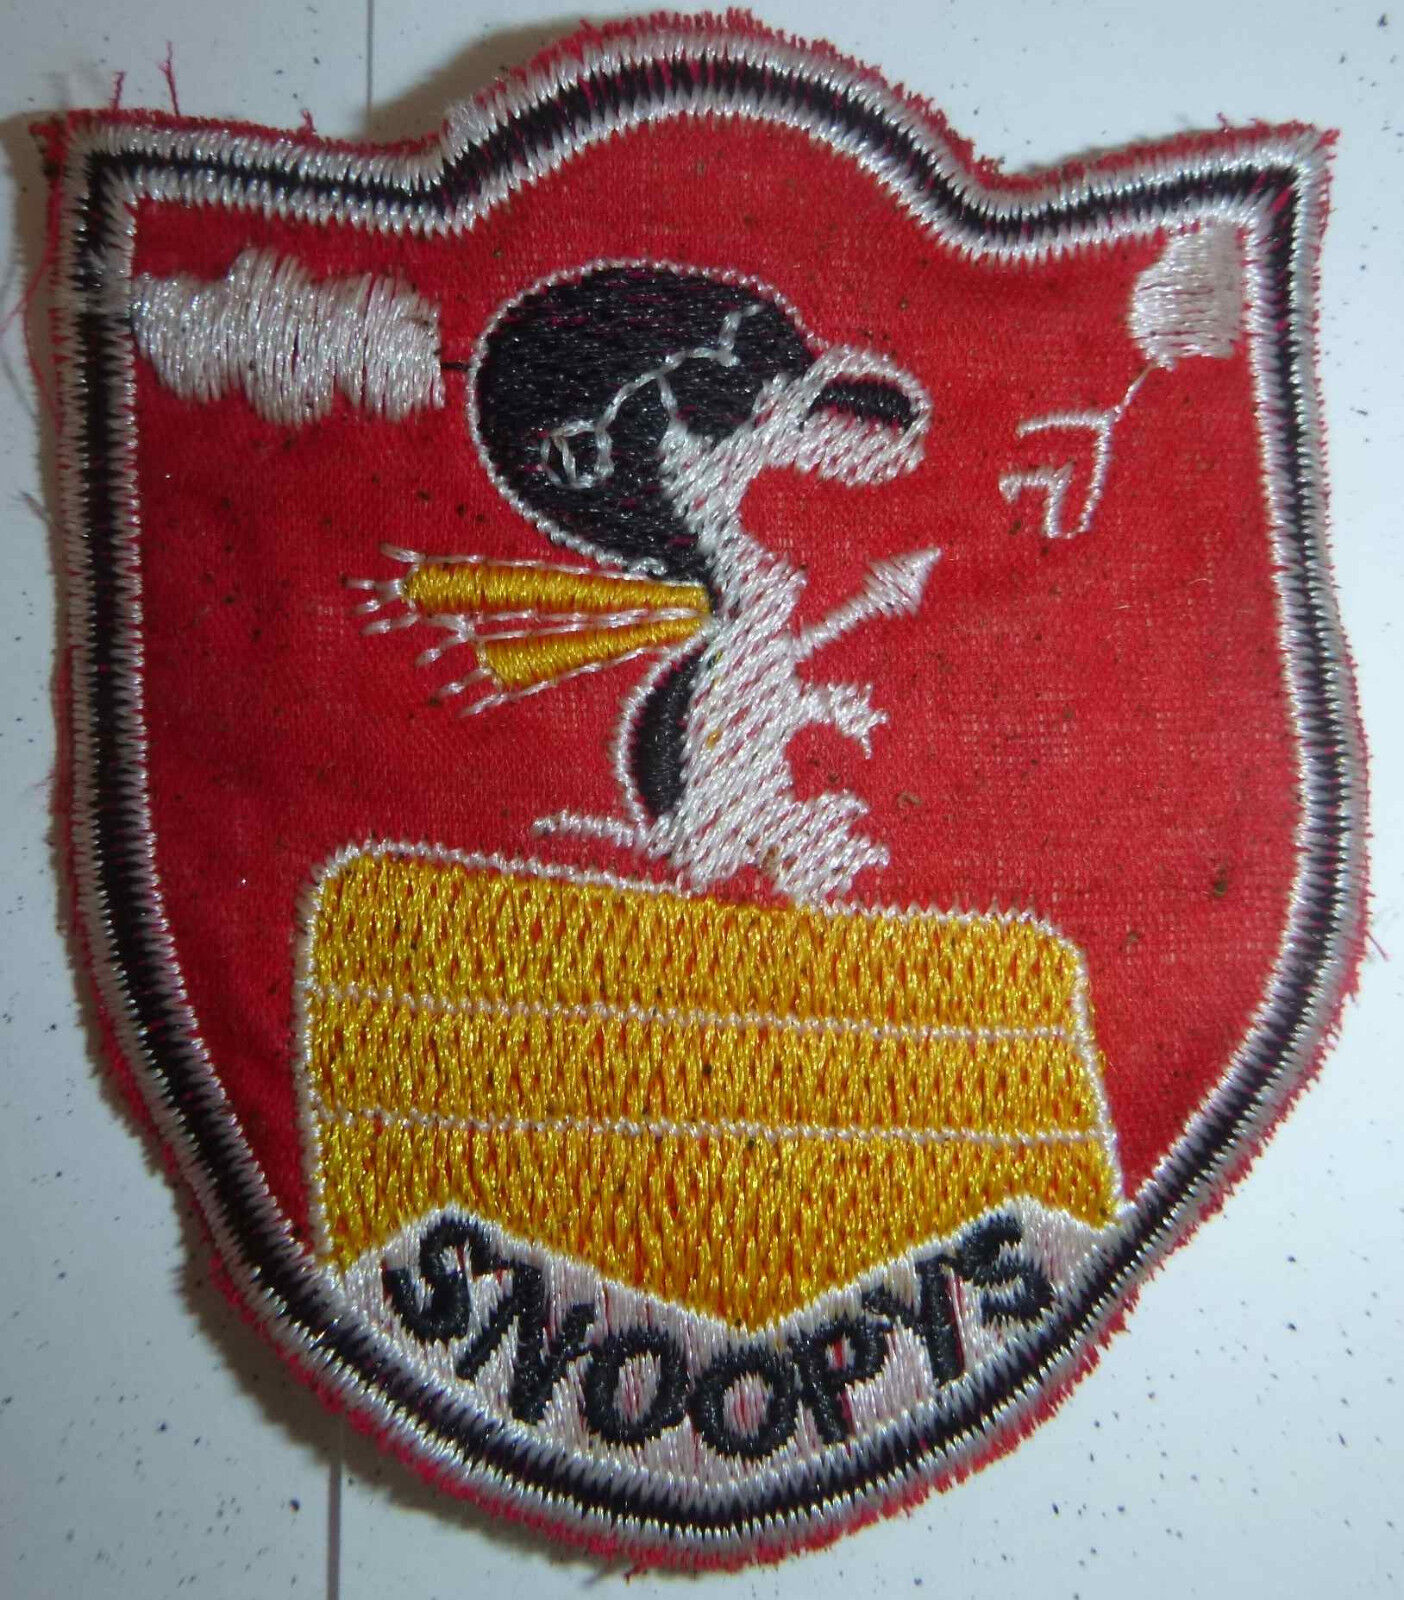 SNOOPY OPS PATCH - US AIR FORCE - 20th TASS - KHE SANH, HUE - Vietnam War - W127